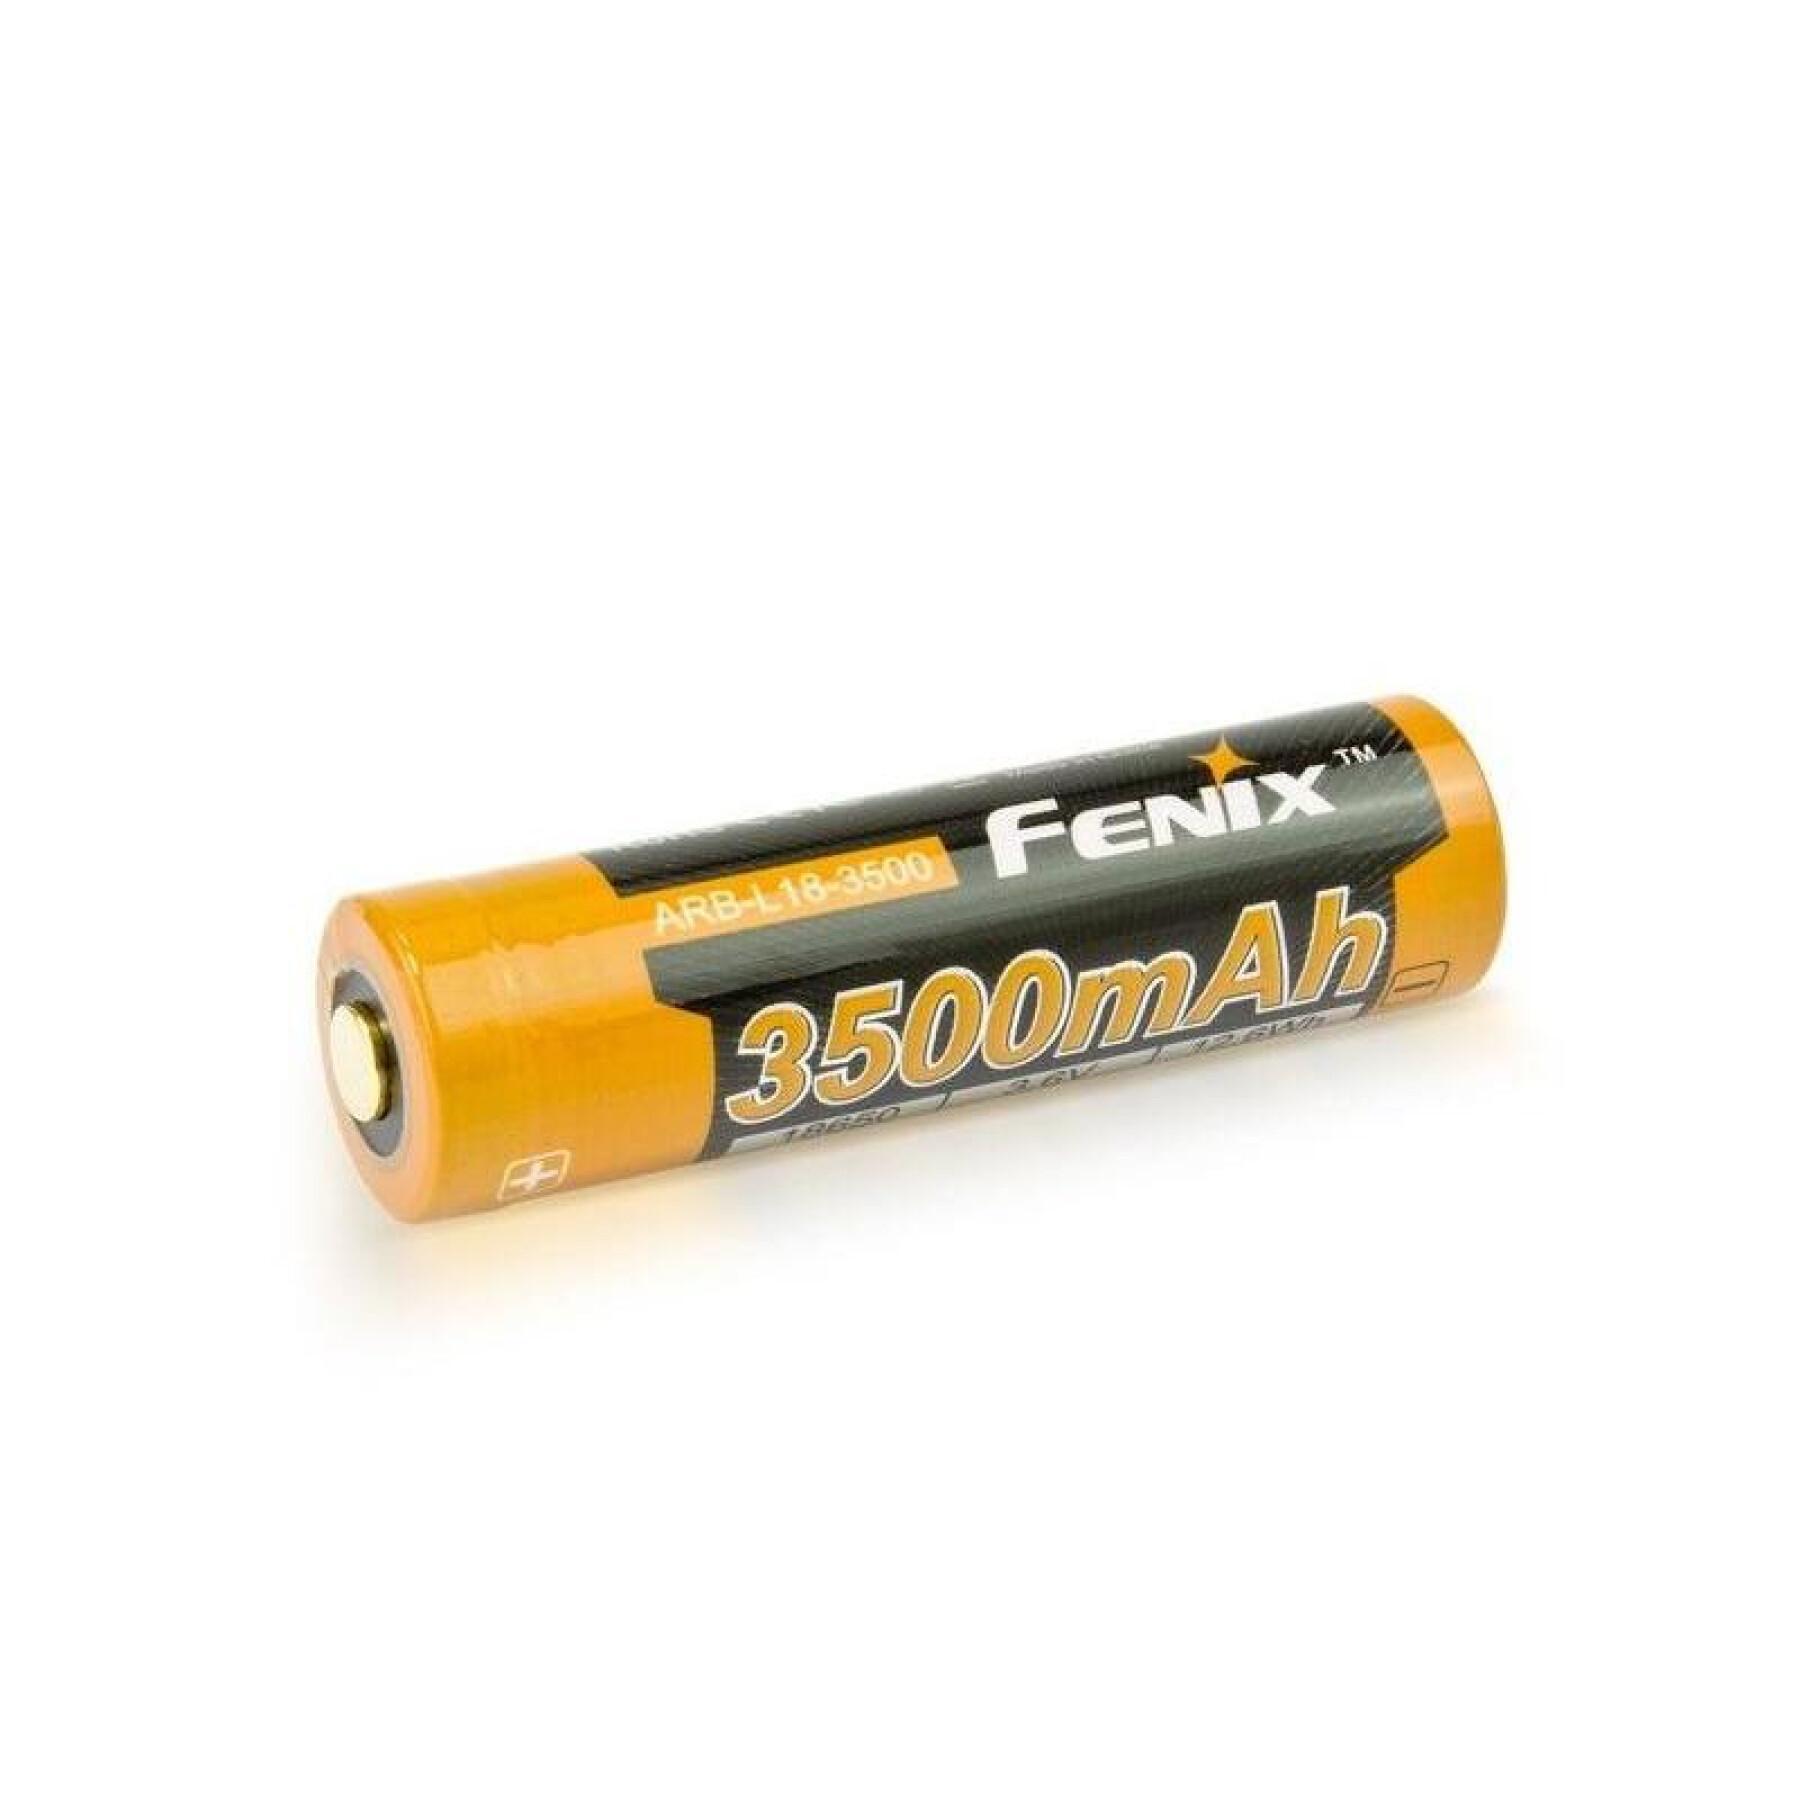 Batteria 18650 Fenix Ricaricabile Li-ion ARB-L18-3500